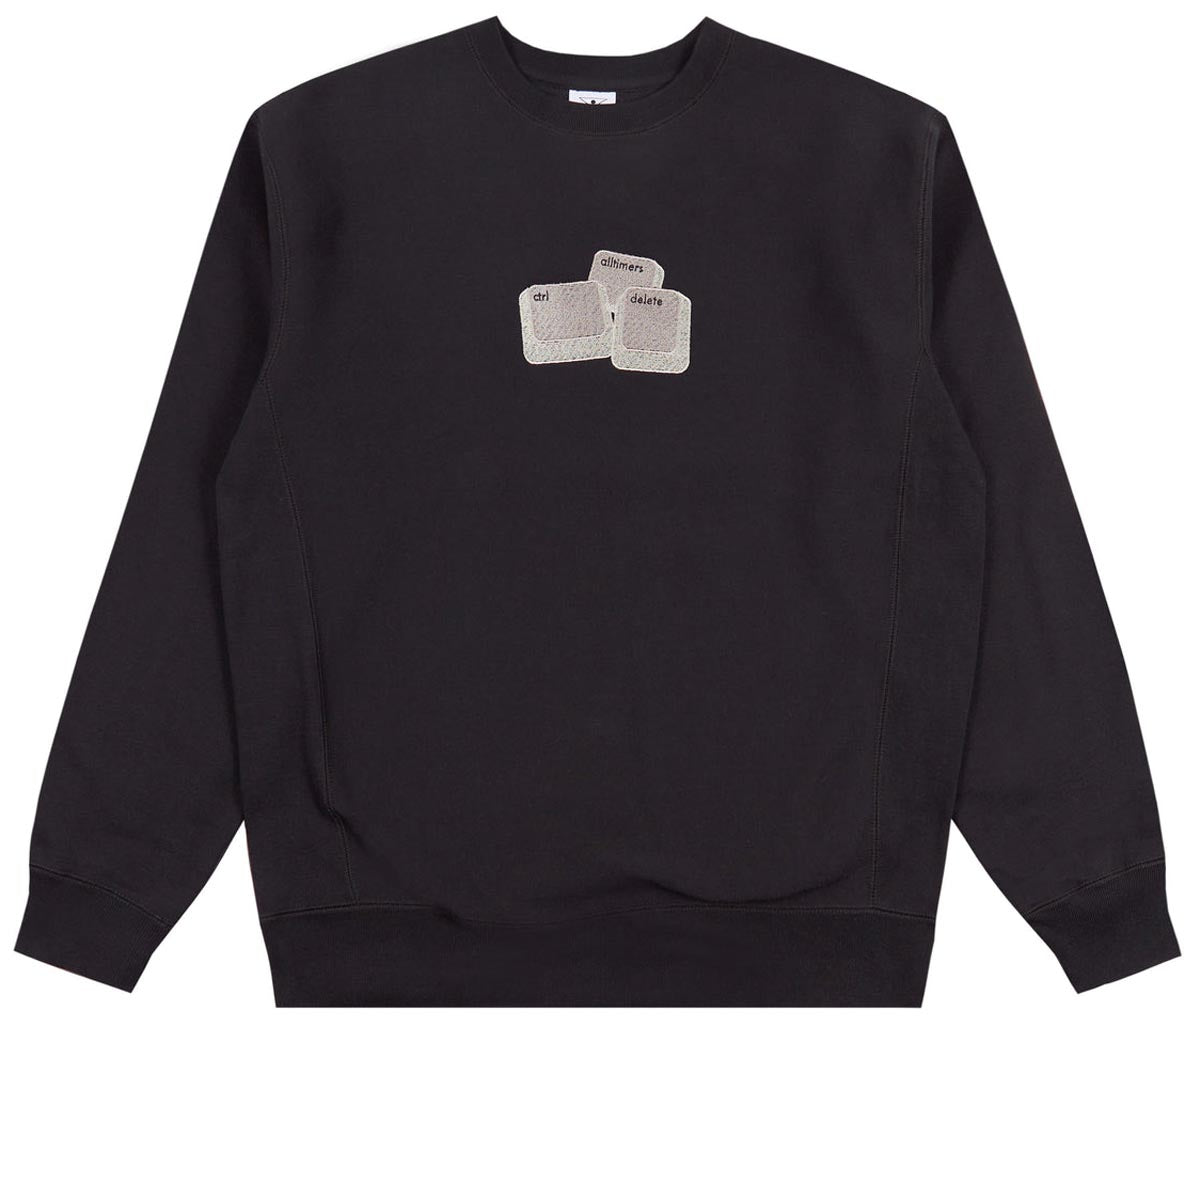 Alltimers Delete Embroidered Crewneck Sweatshirt - Black image 1